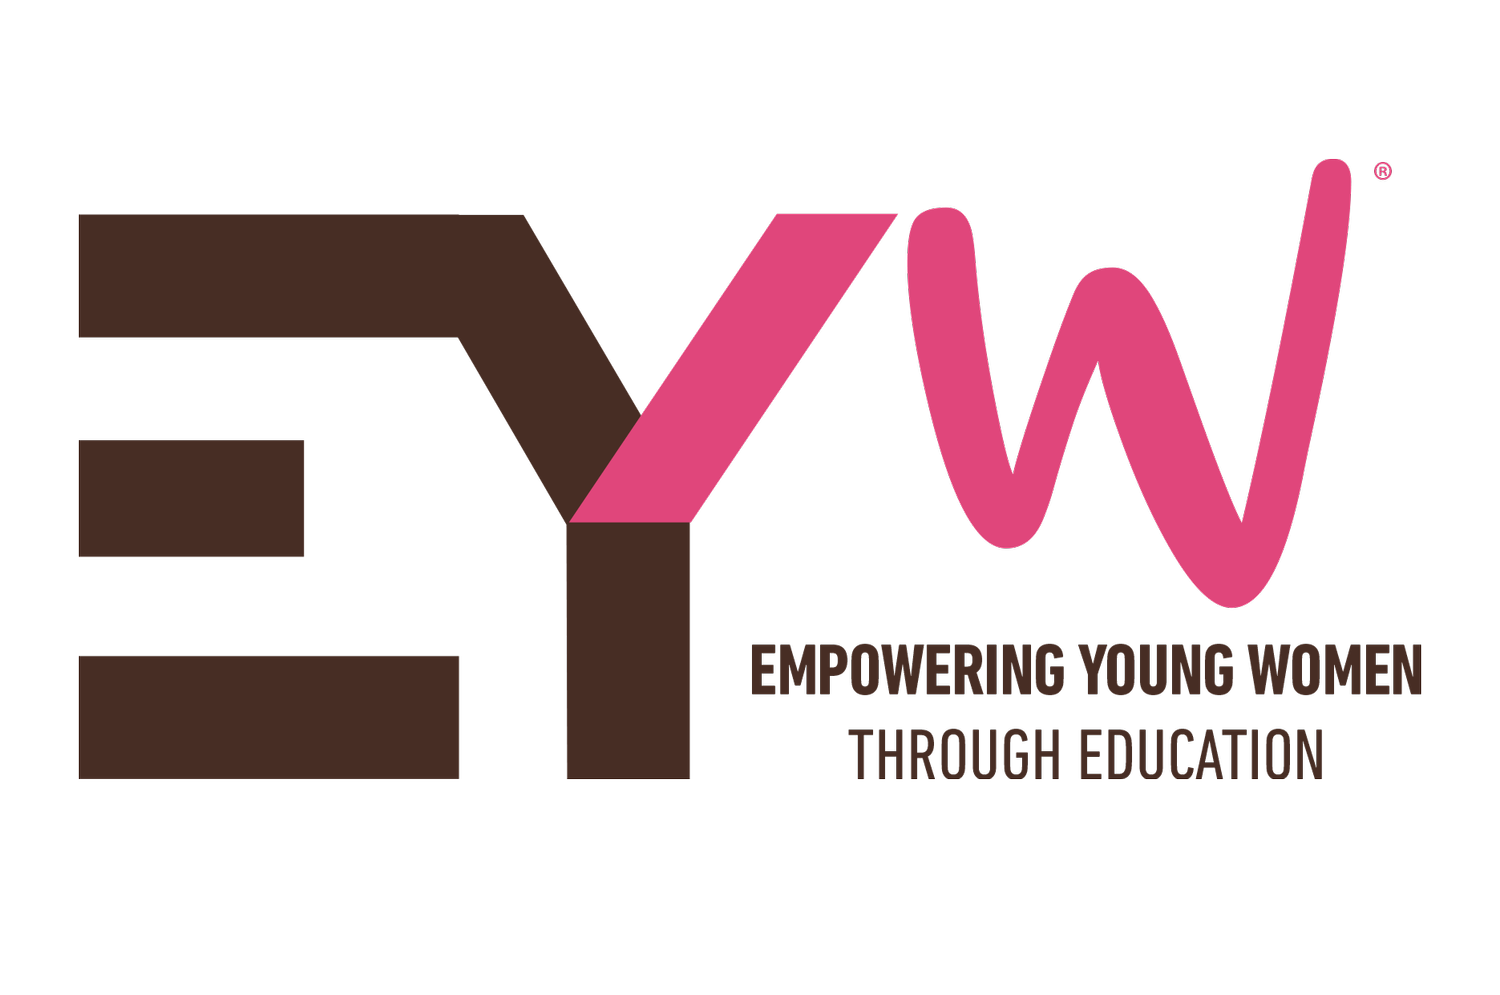 EYW Empowering Young Women